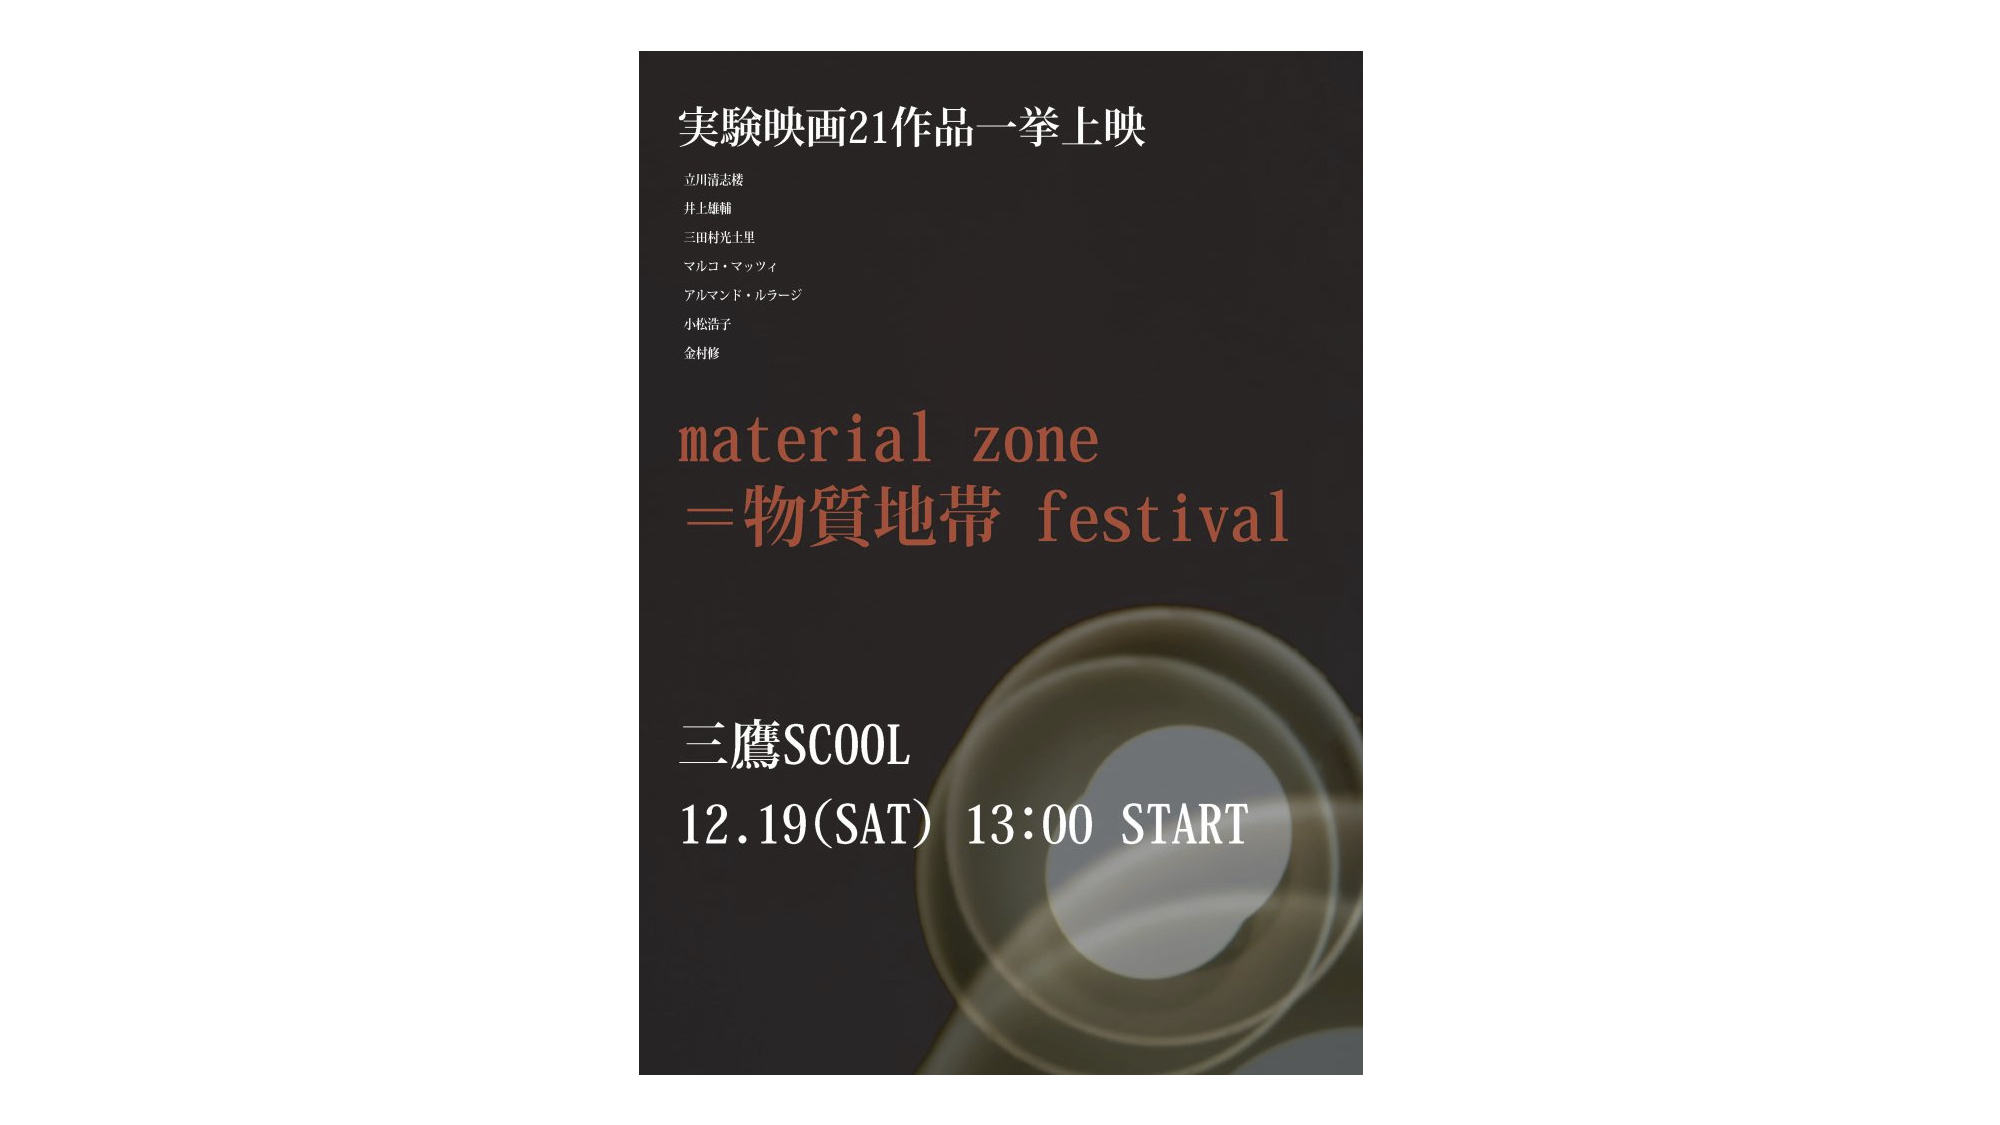 material zone＝物質地帯 festival